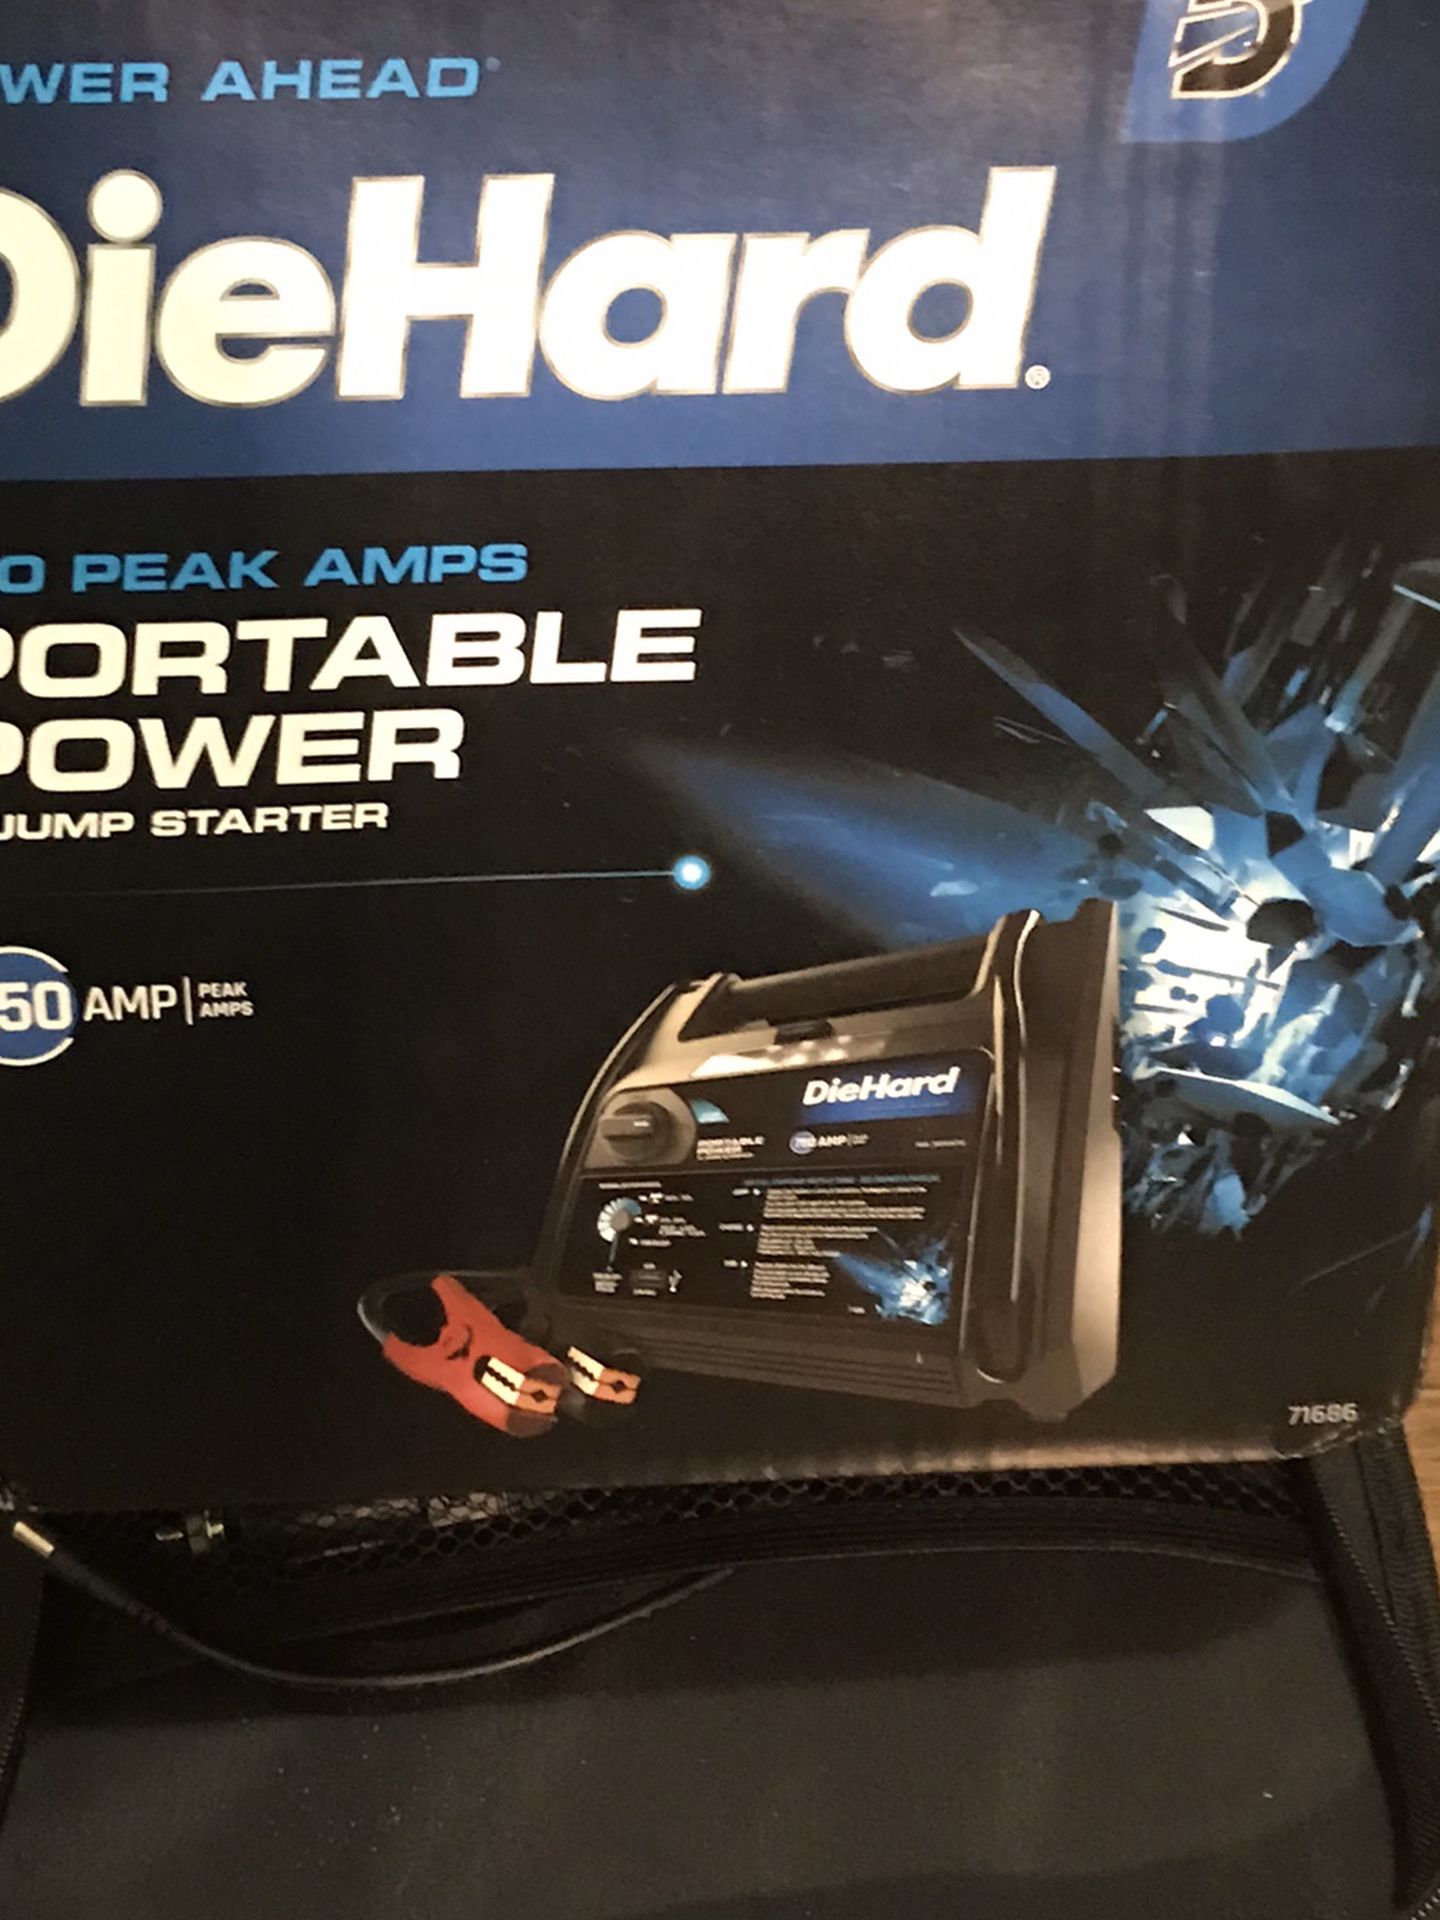 Die Hard (750) Portable Power Vehicle jump Starter